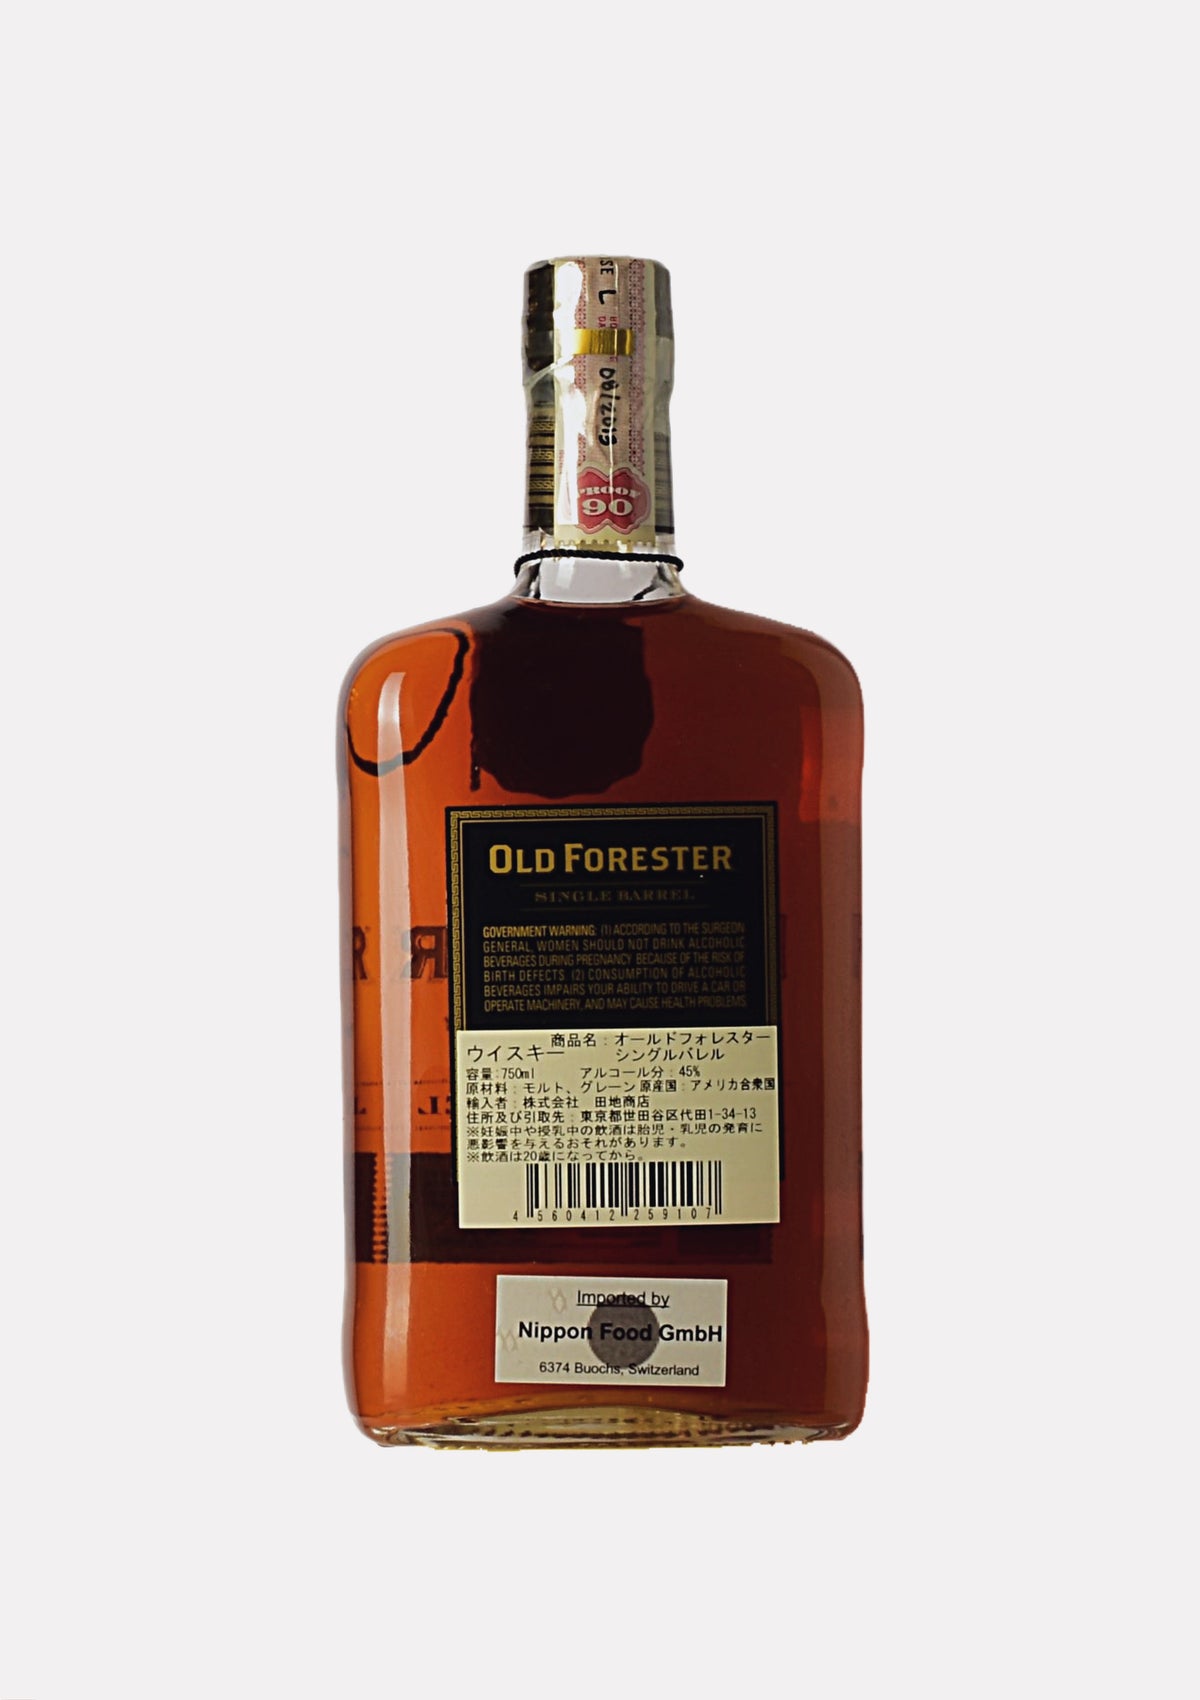 Old Forester Single Barrel Kentucky Straight Bourbon Whiskey